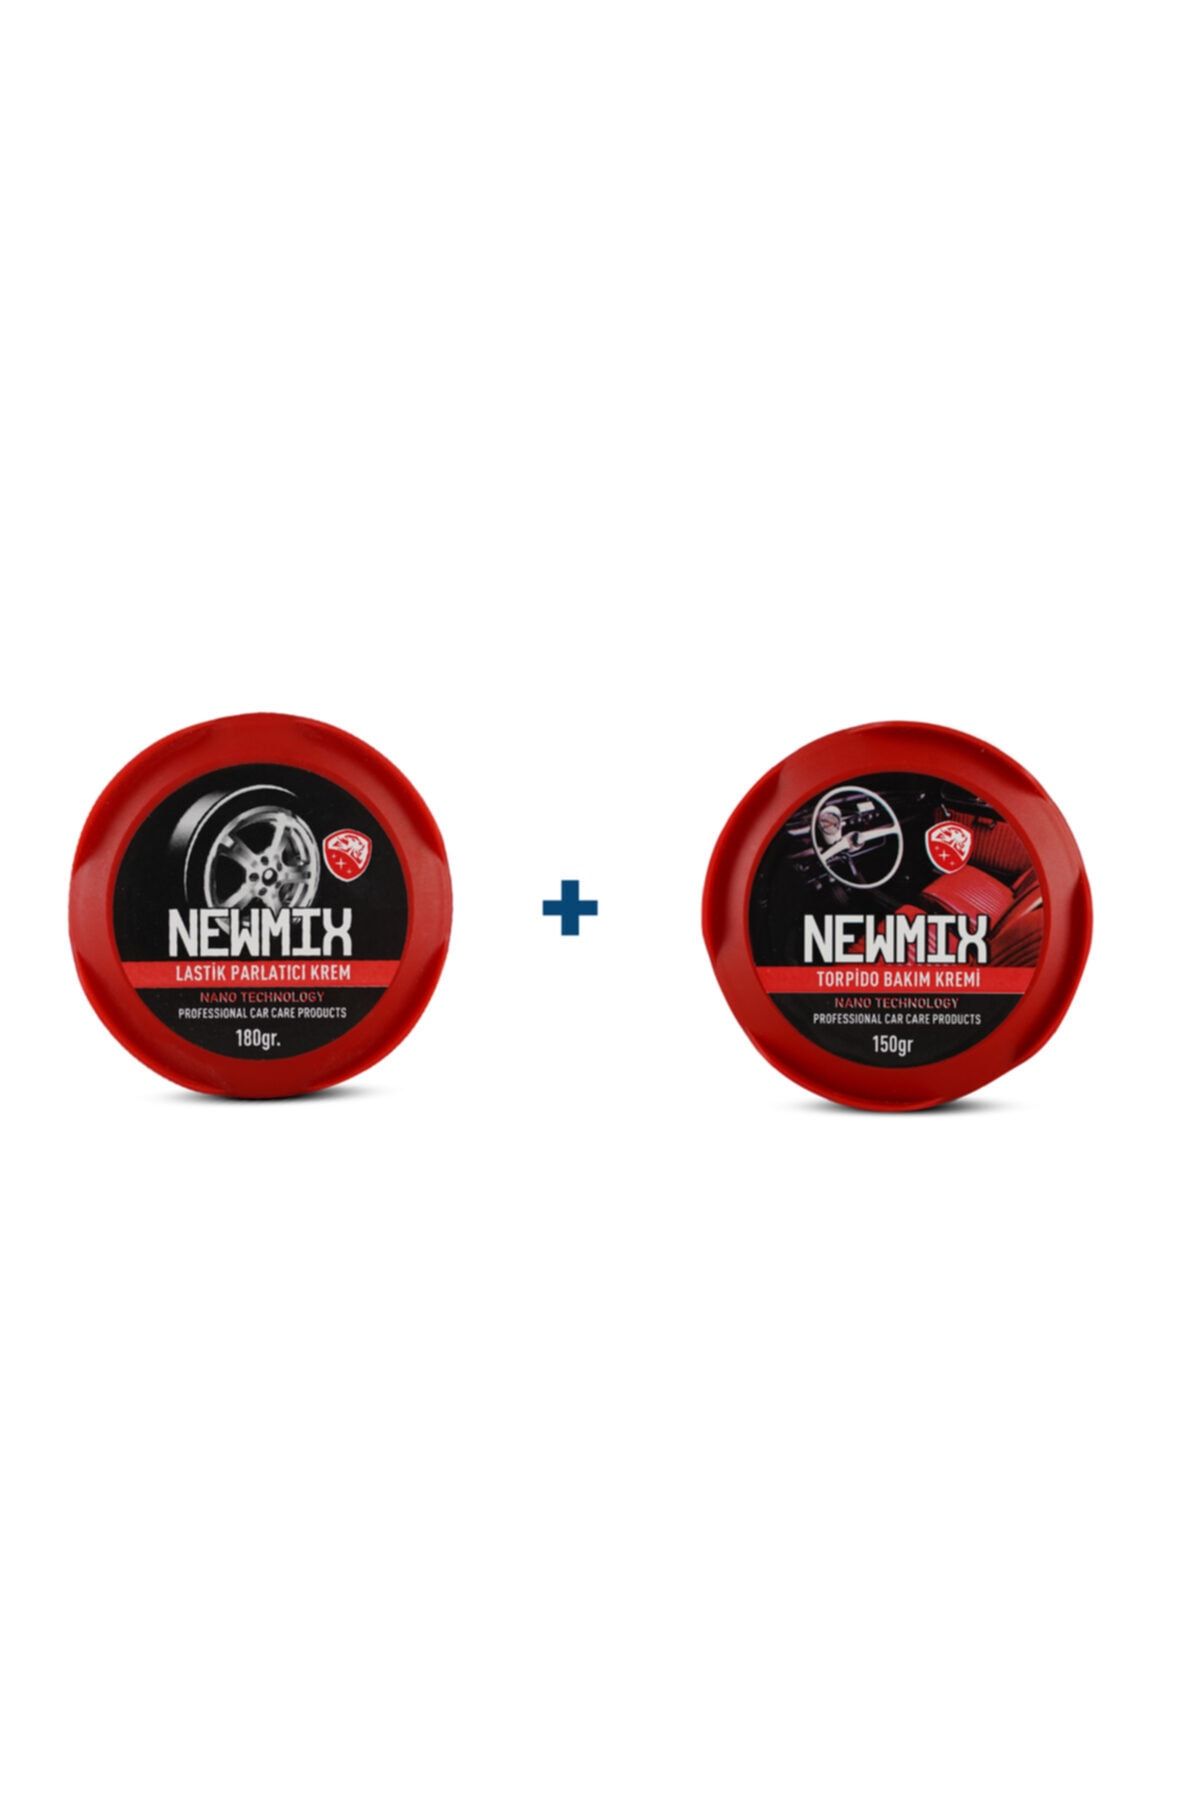 Newmix Newmiz Nano Lastik Parlatıcı 180gr Ve Torpido Bakım Kremi 150gr